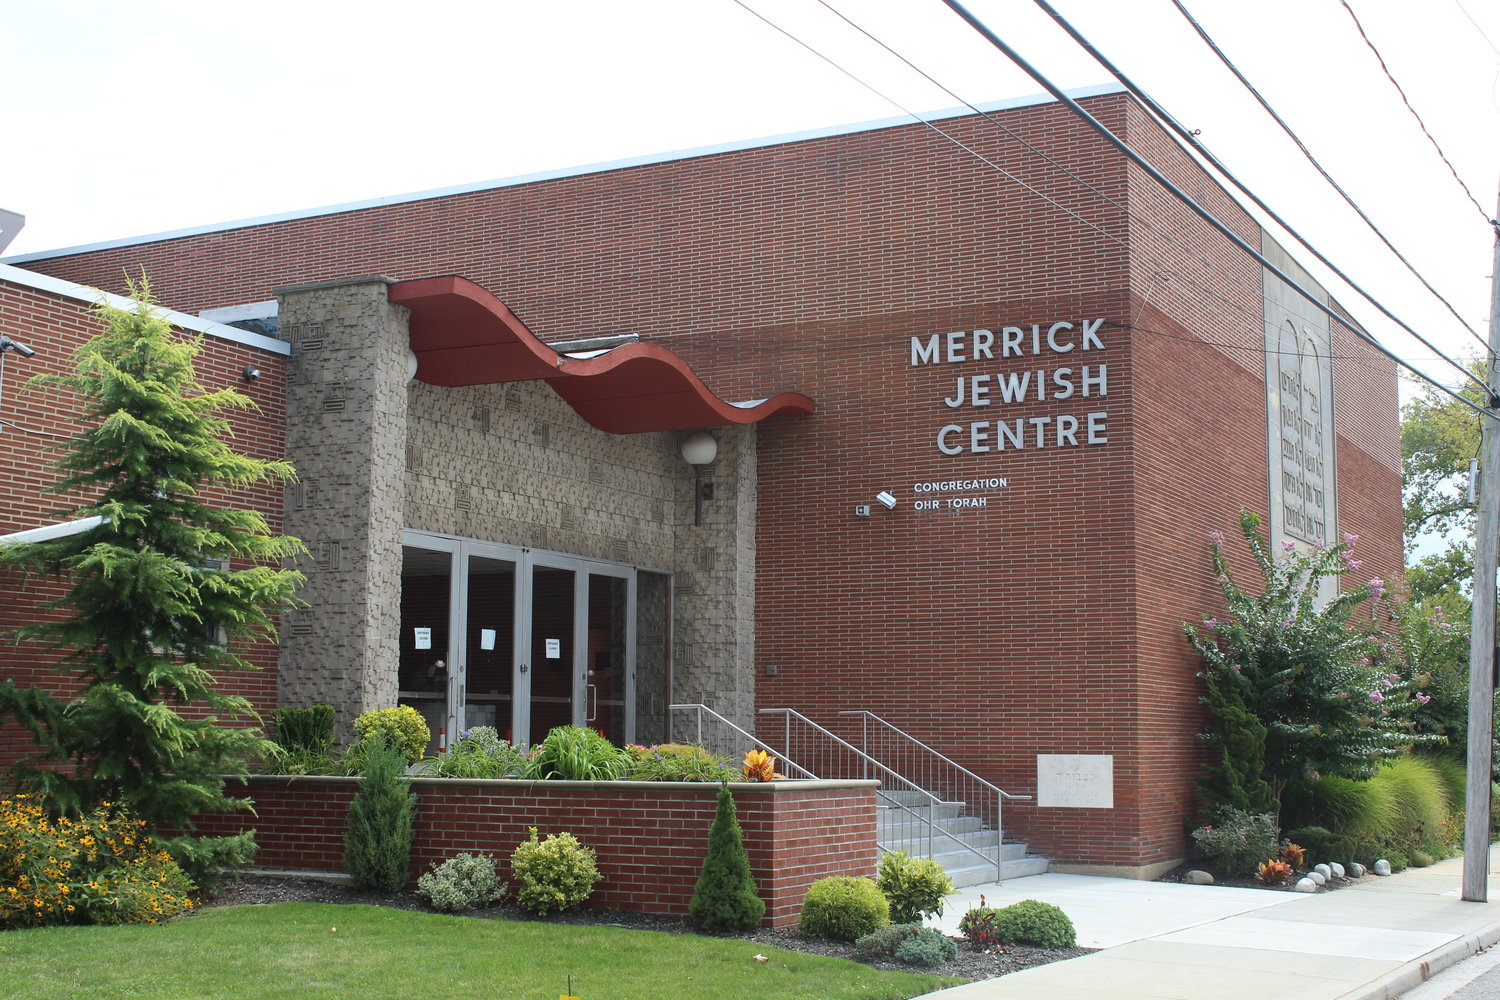 The Merrick Jewish Centre has organized a coronavirus-response committee to aid residents in need.